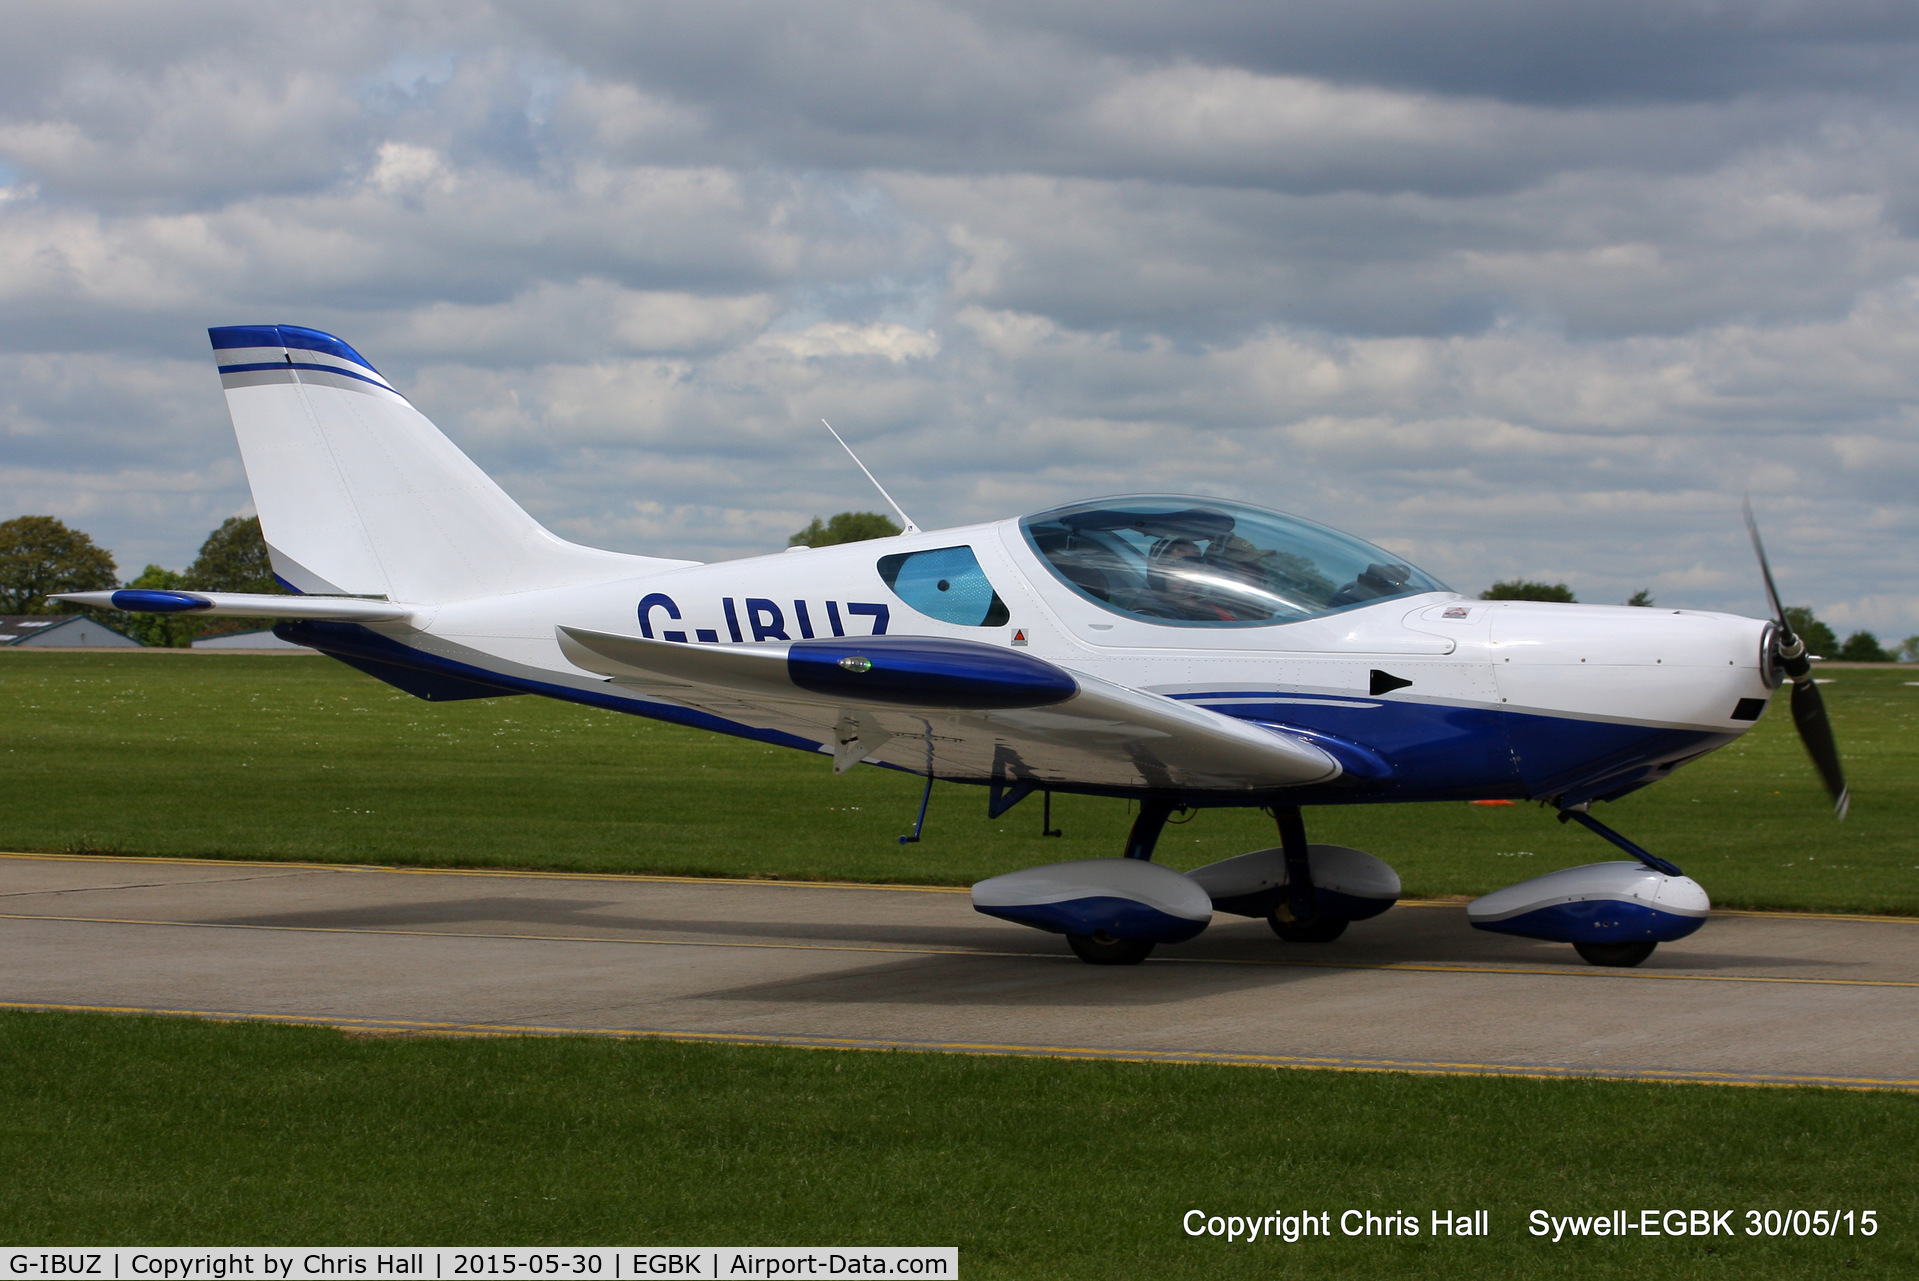 G-IBUZ, 2010 CZAW SportCruiser C/N LAA 338-14825, at Aeroexpo 2015